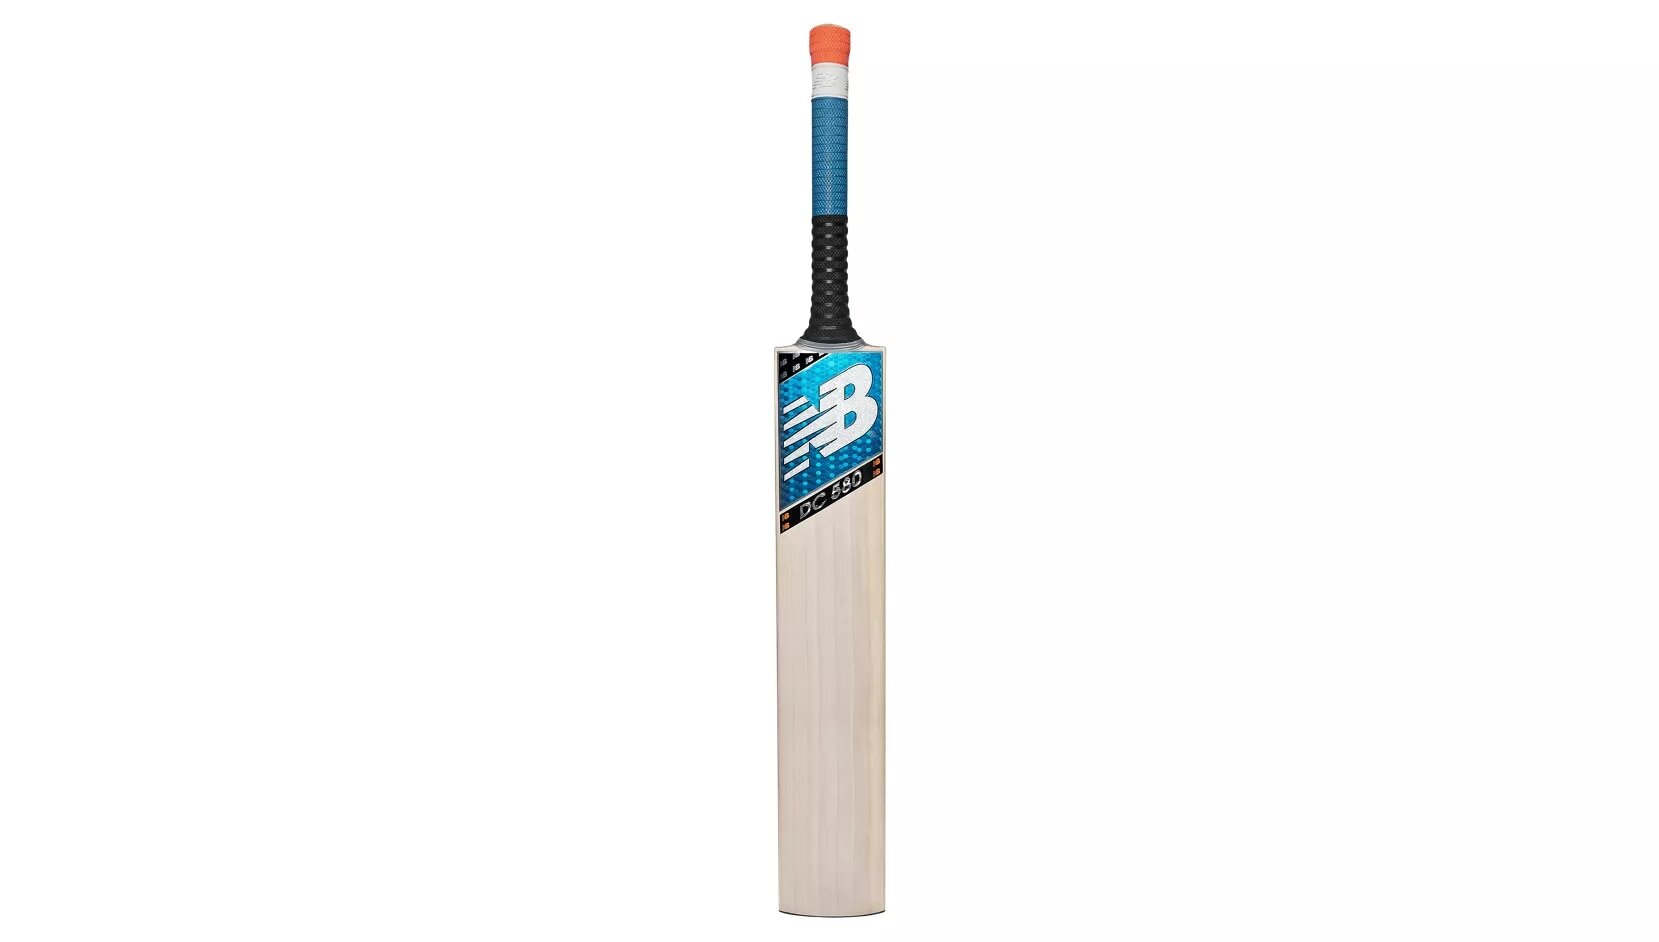 New Balance DC580 Cricket Bat 2019 